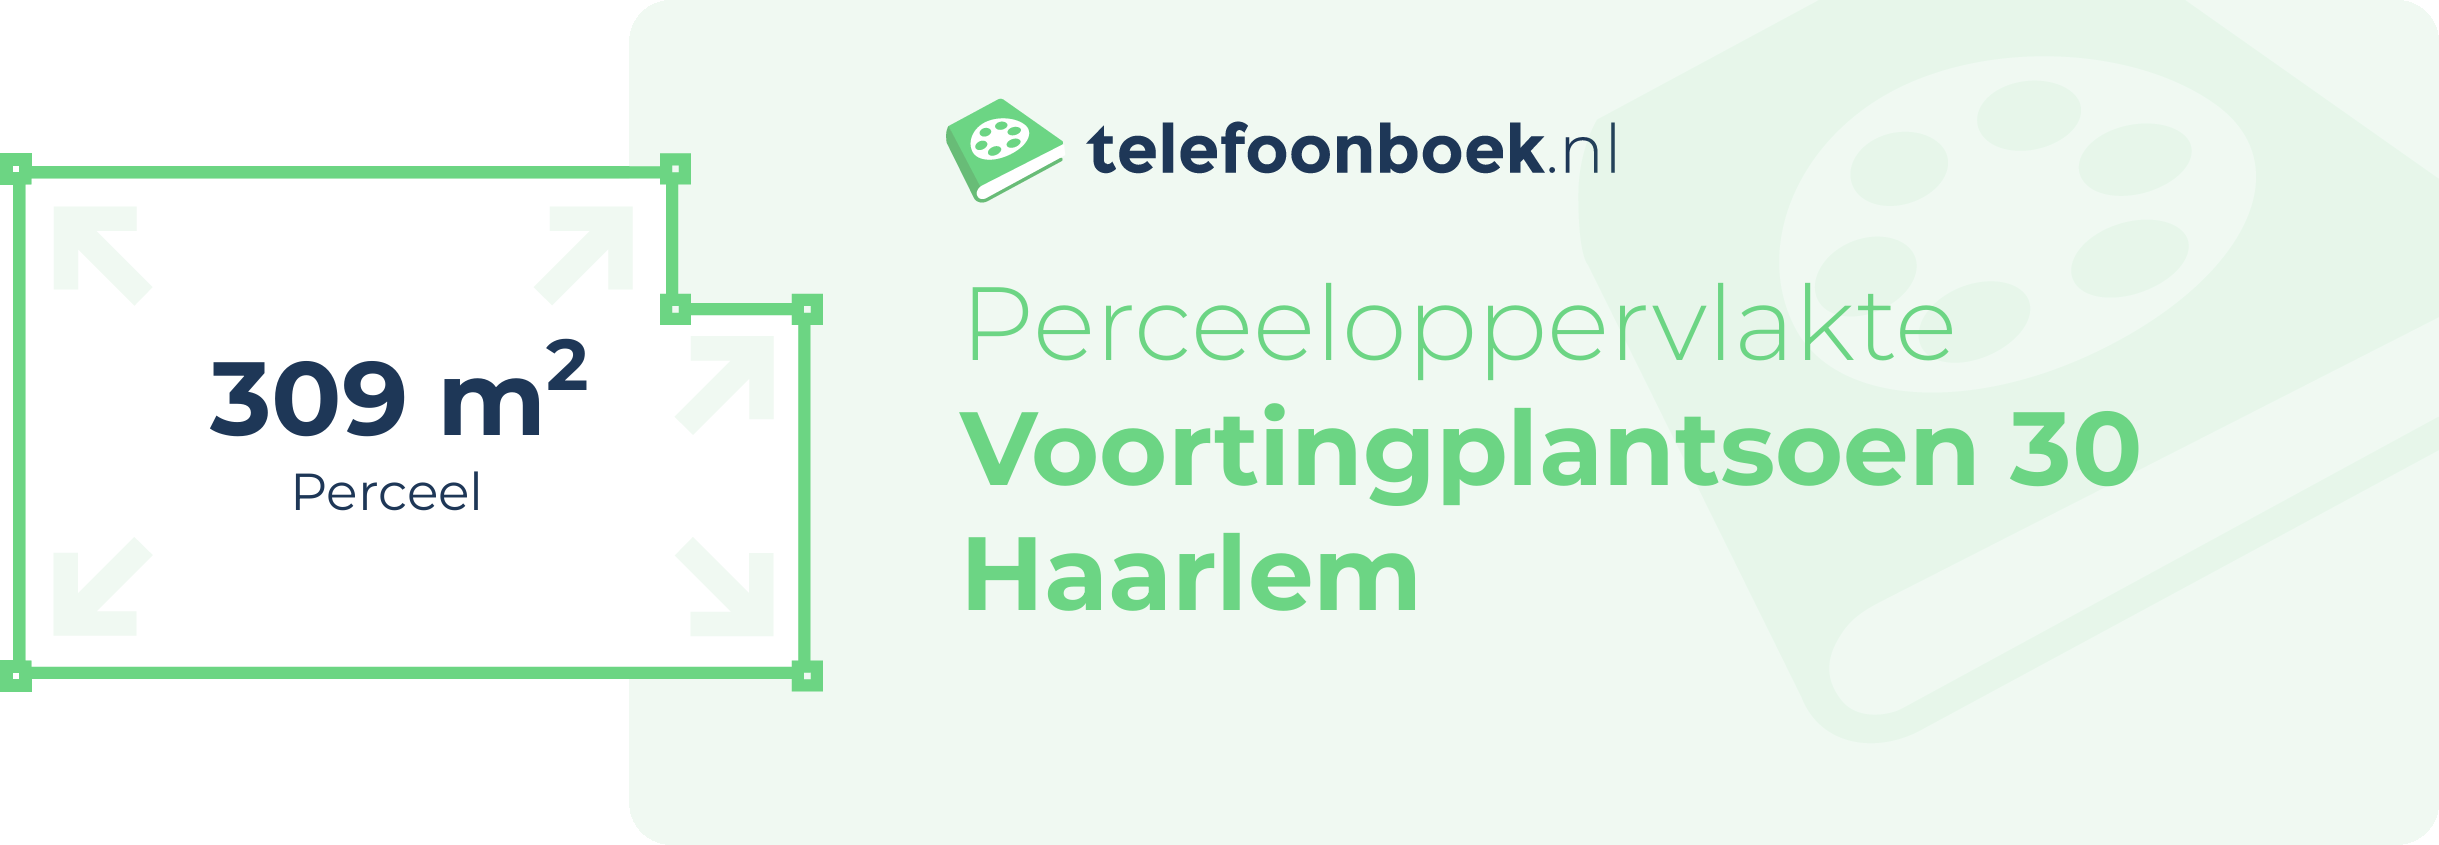 Perceeloppervlakte Voortingplantsoen 30 Haarlem